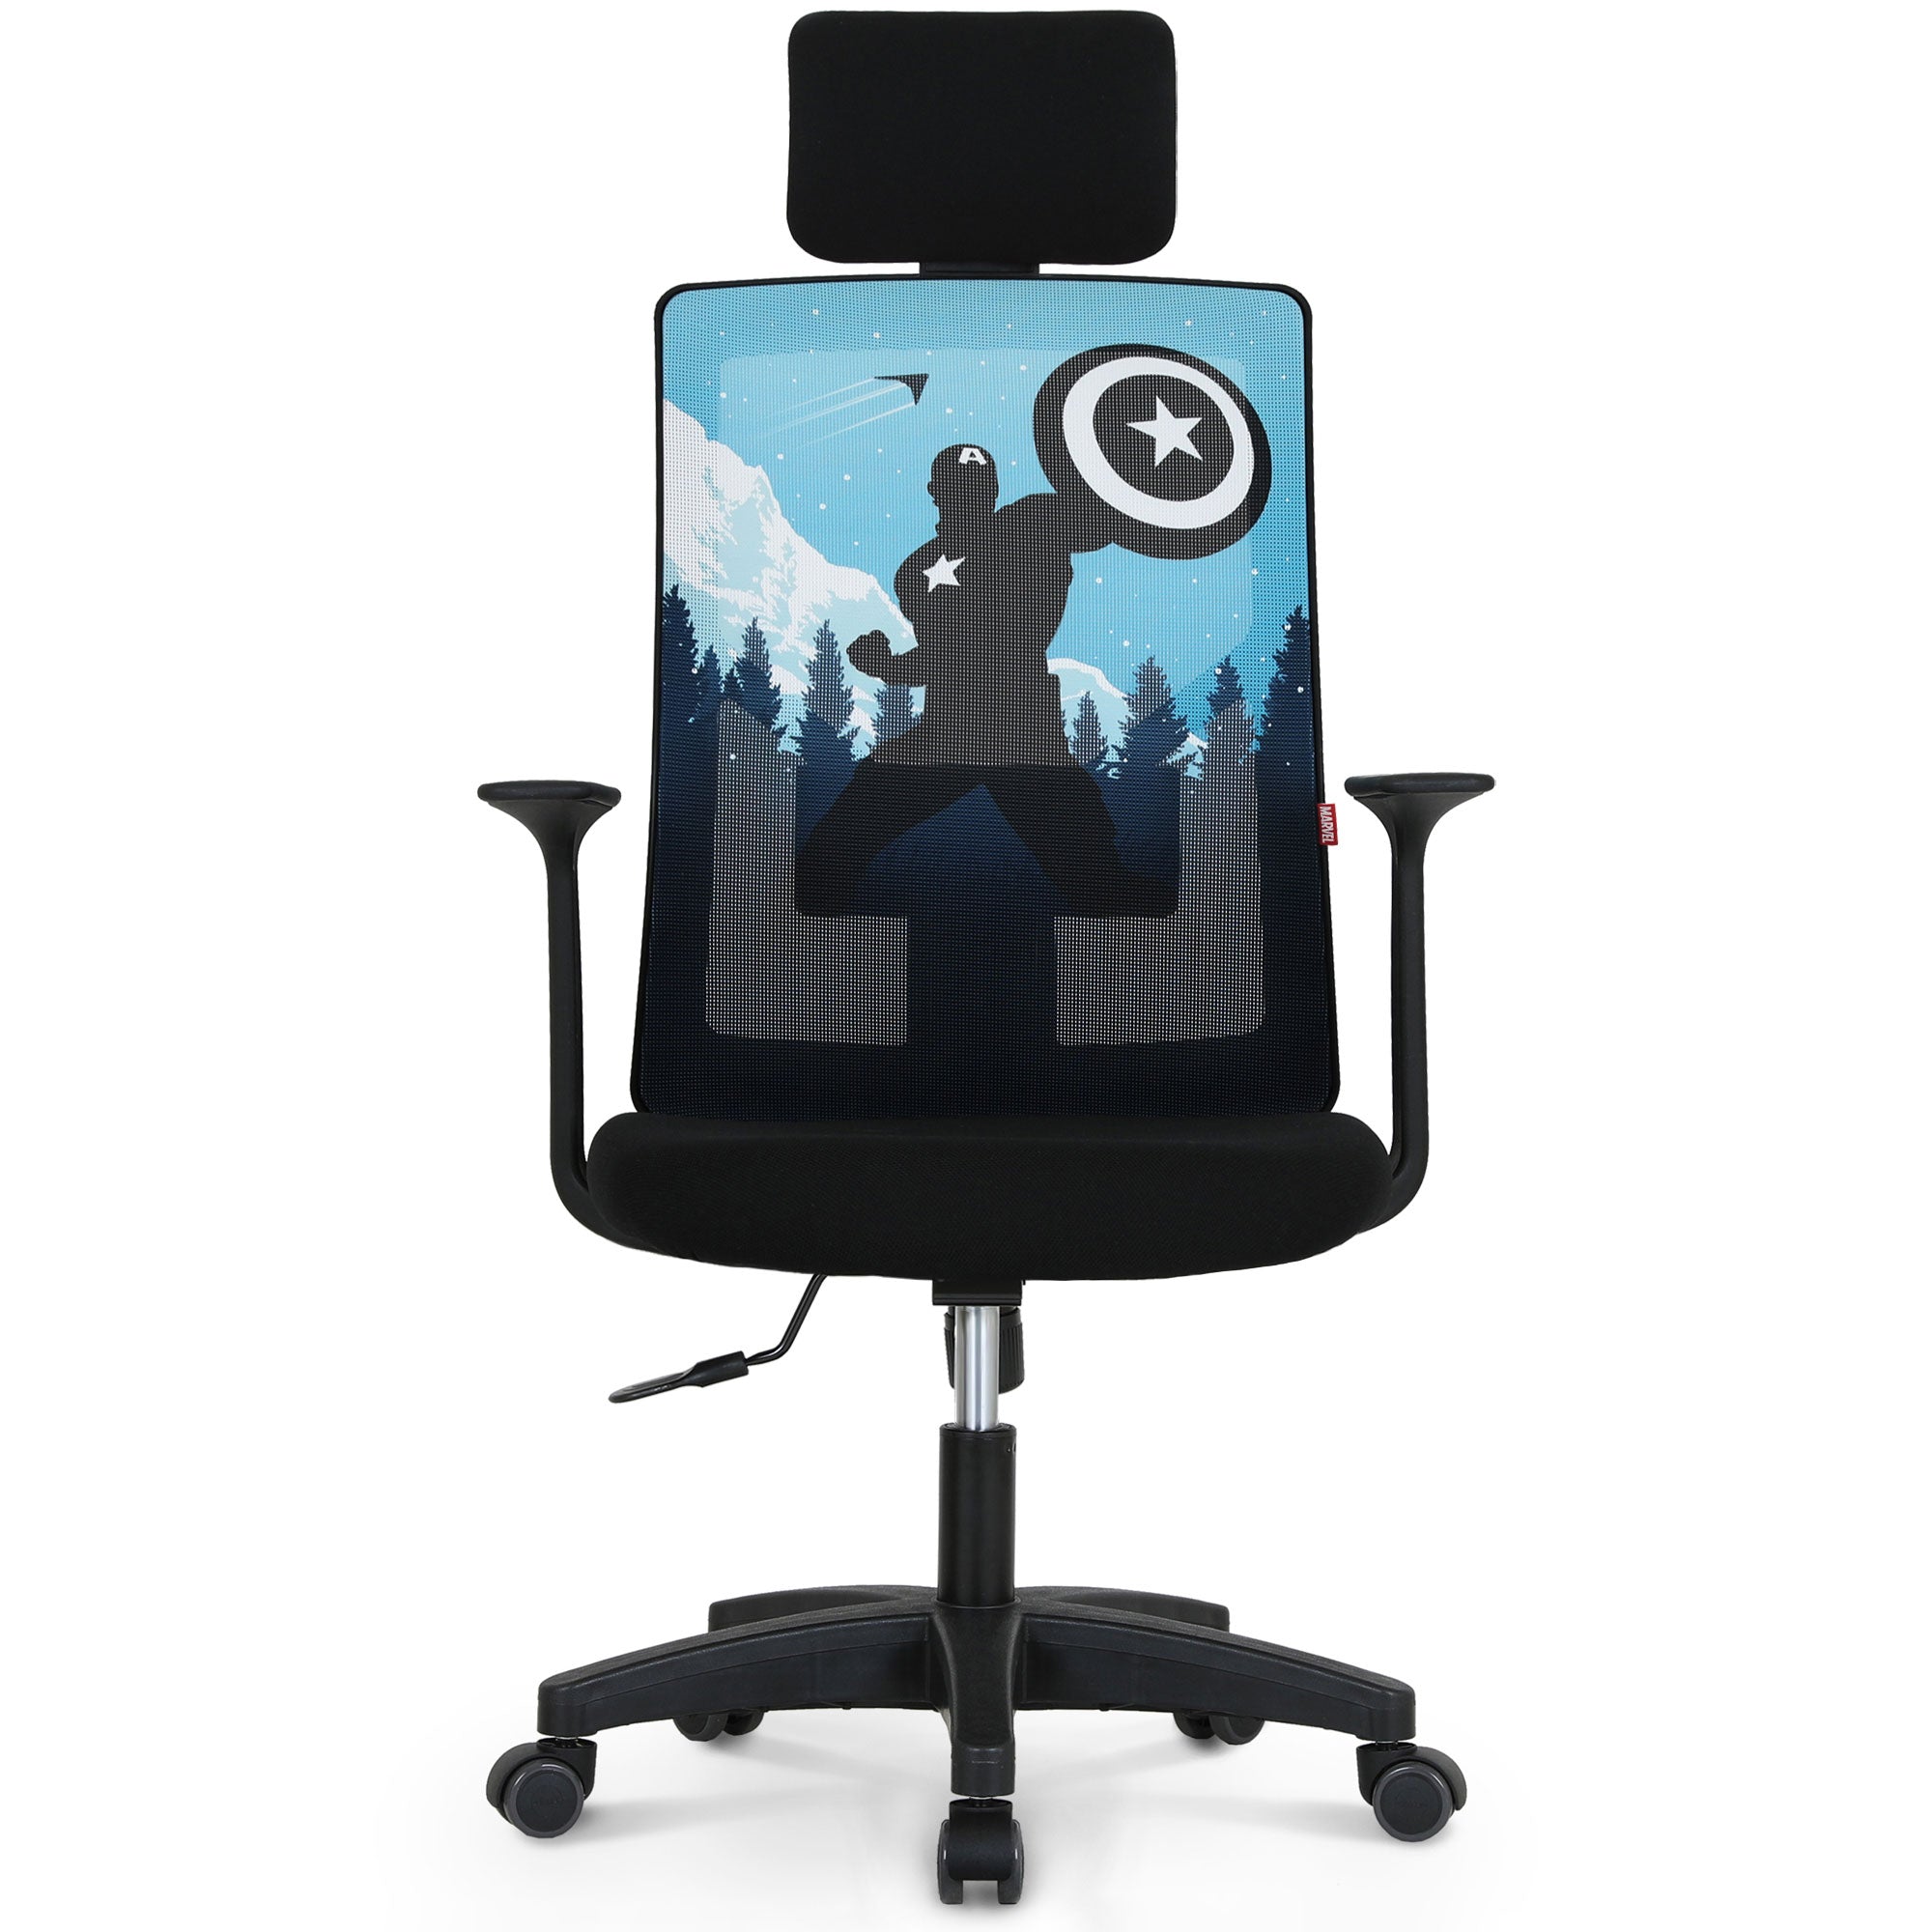 MK10 Captain America Edition [Headrest Ver.] (MV-M10H-CA) Neo Chair Office Chair 99.98 Neo Chair